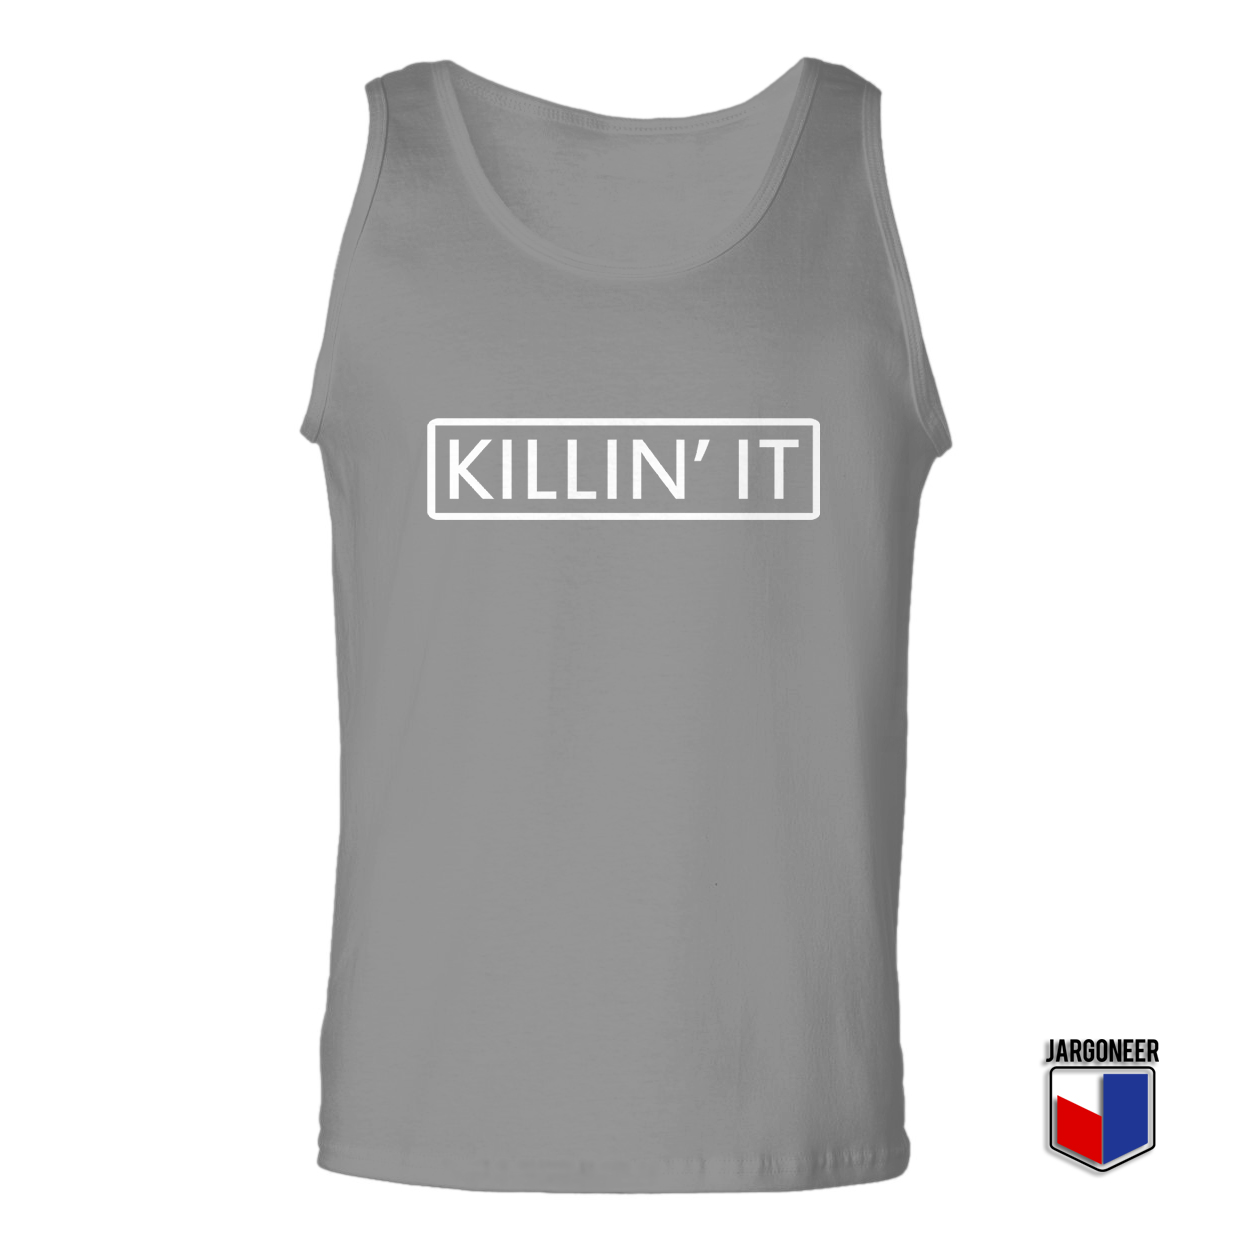 Killin it grey tanktop - Shop Unique Graphic Cool Shirt Designs